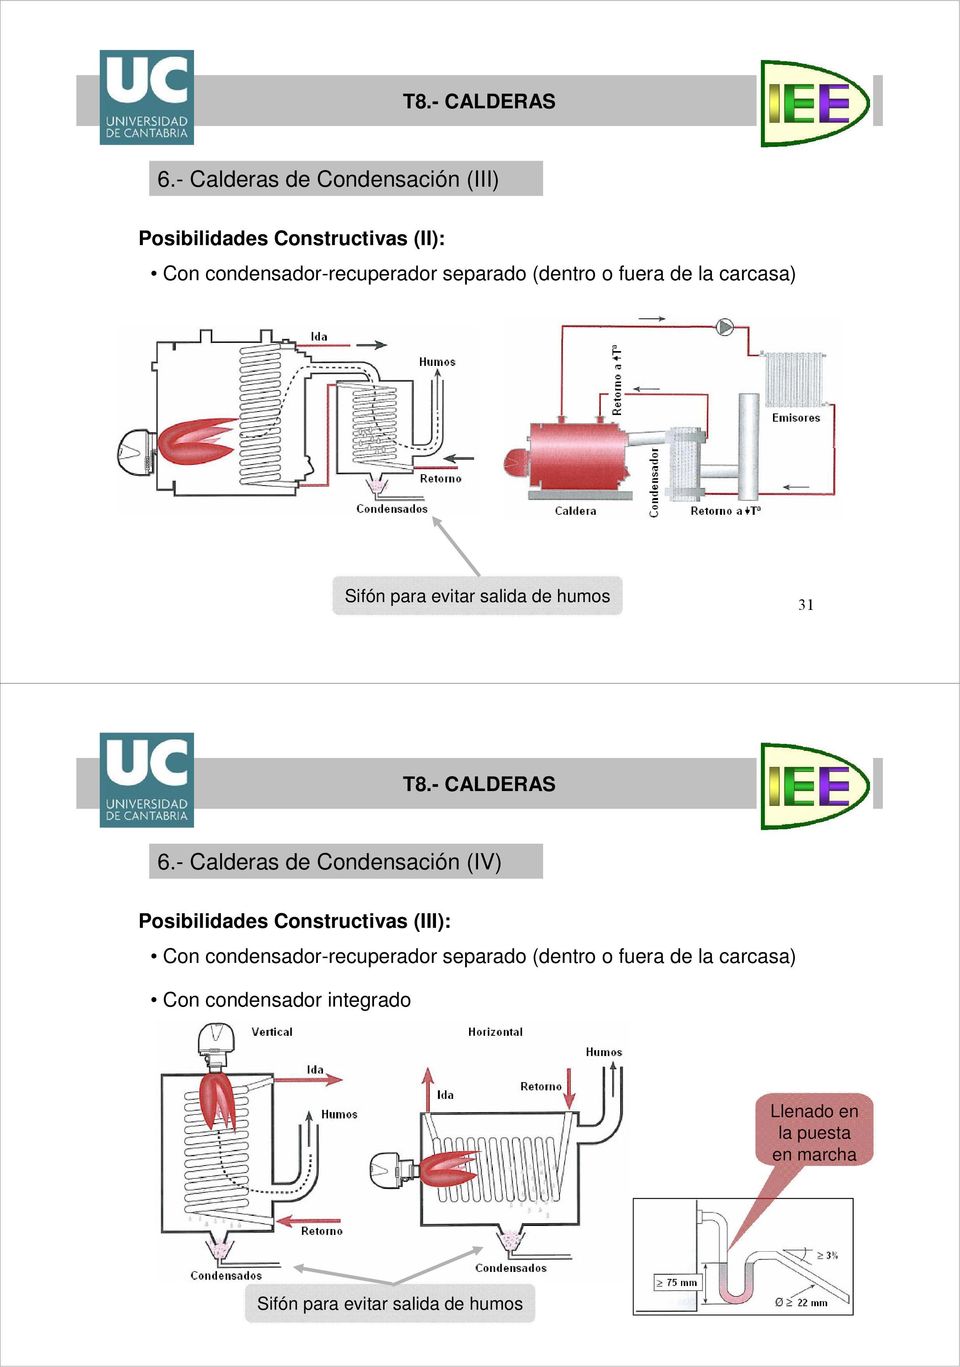 - Calderas de Condensación (IV) Posibilidades Constructivas (III): Con condensador-recuperador